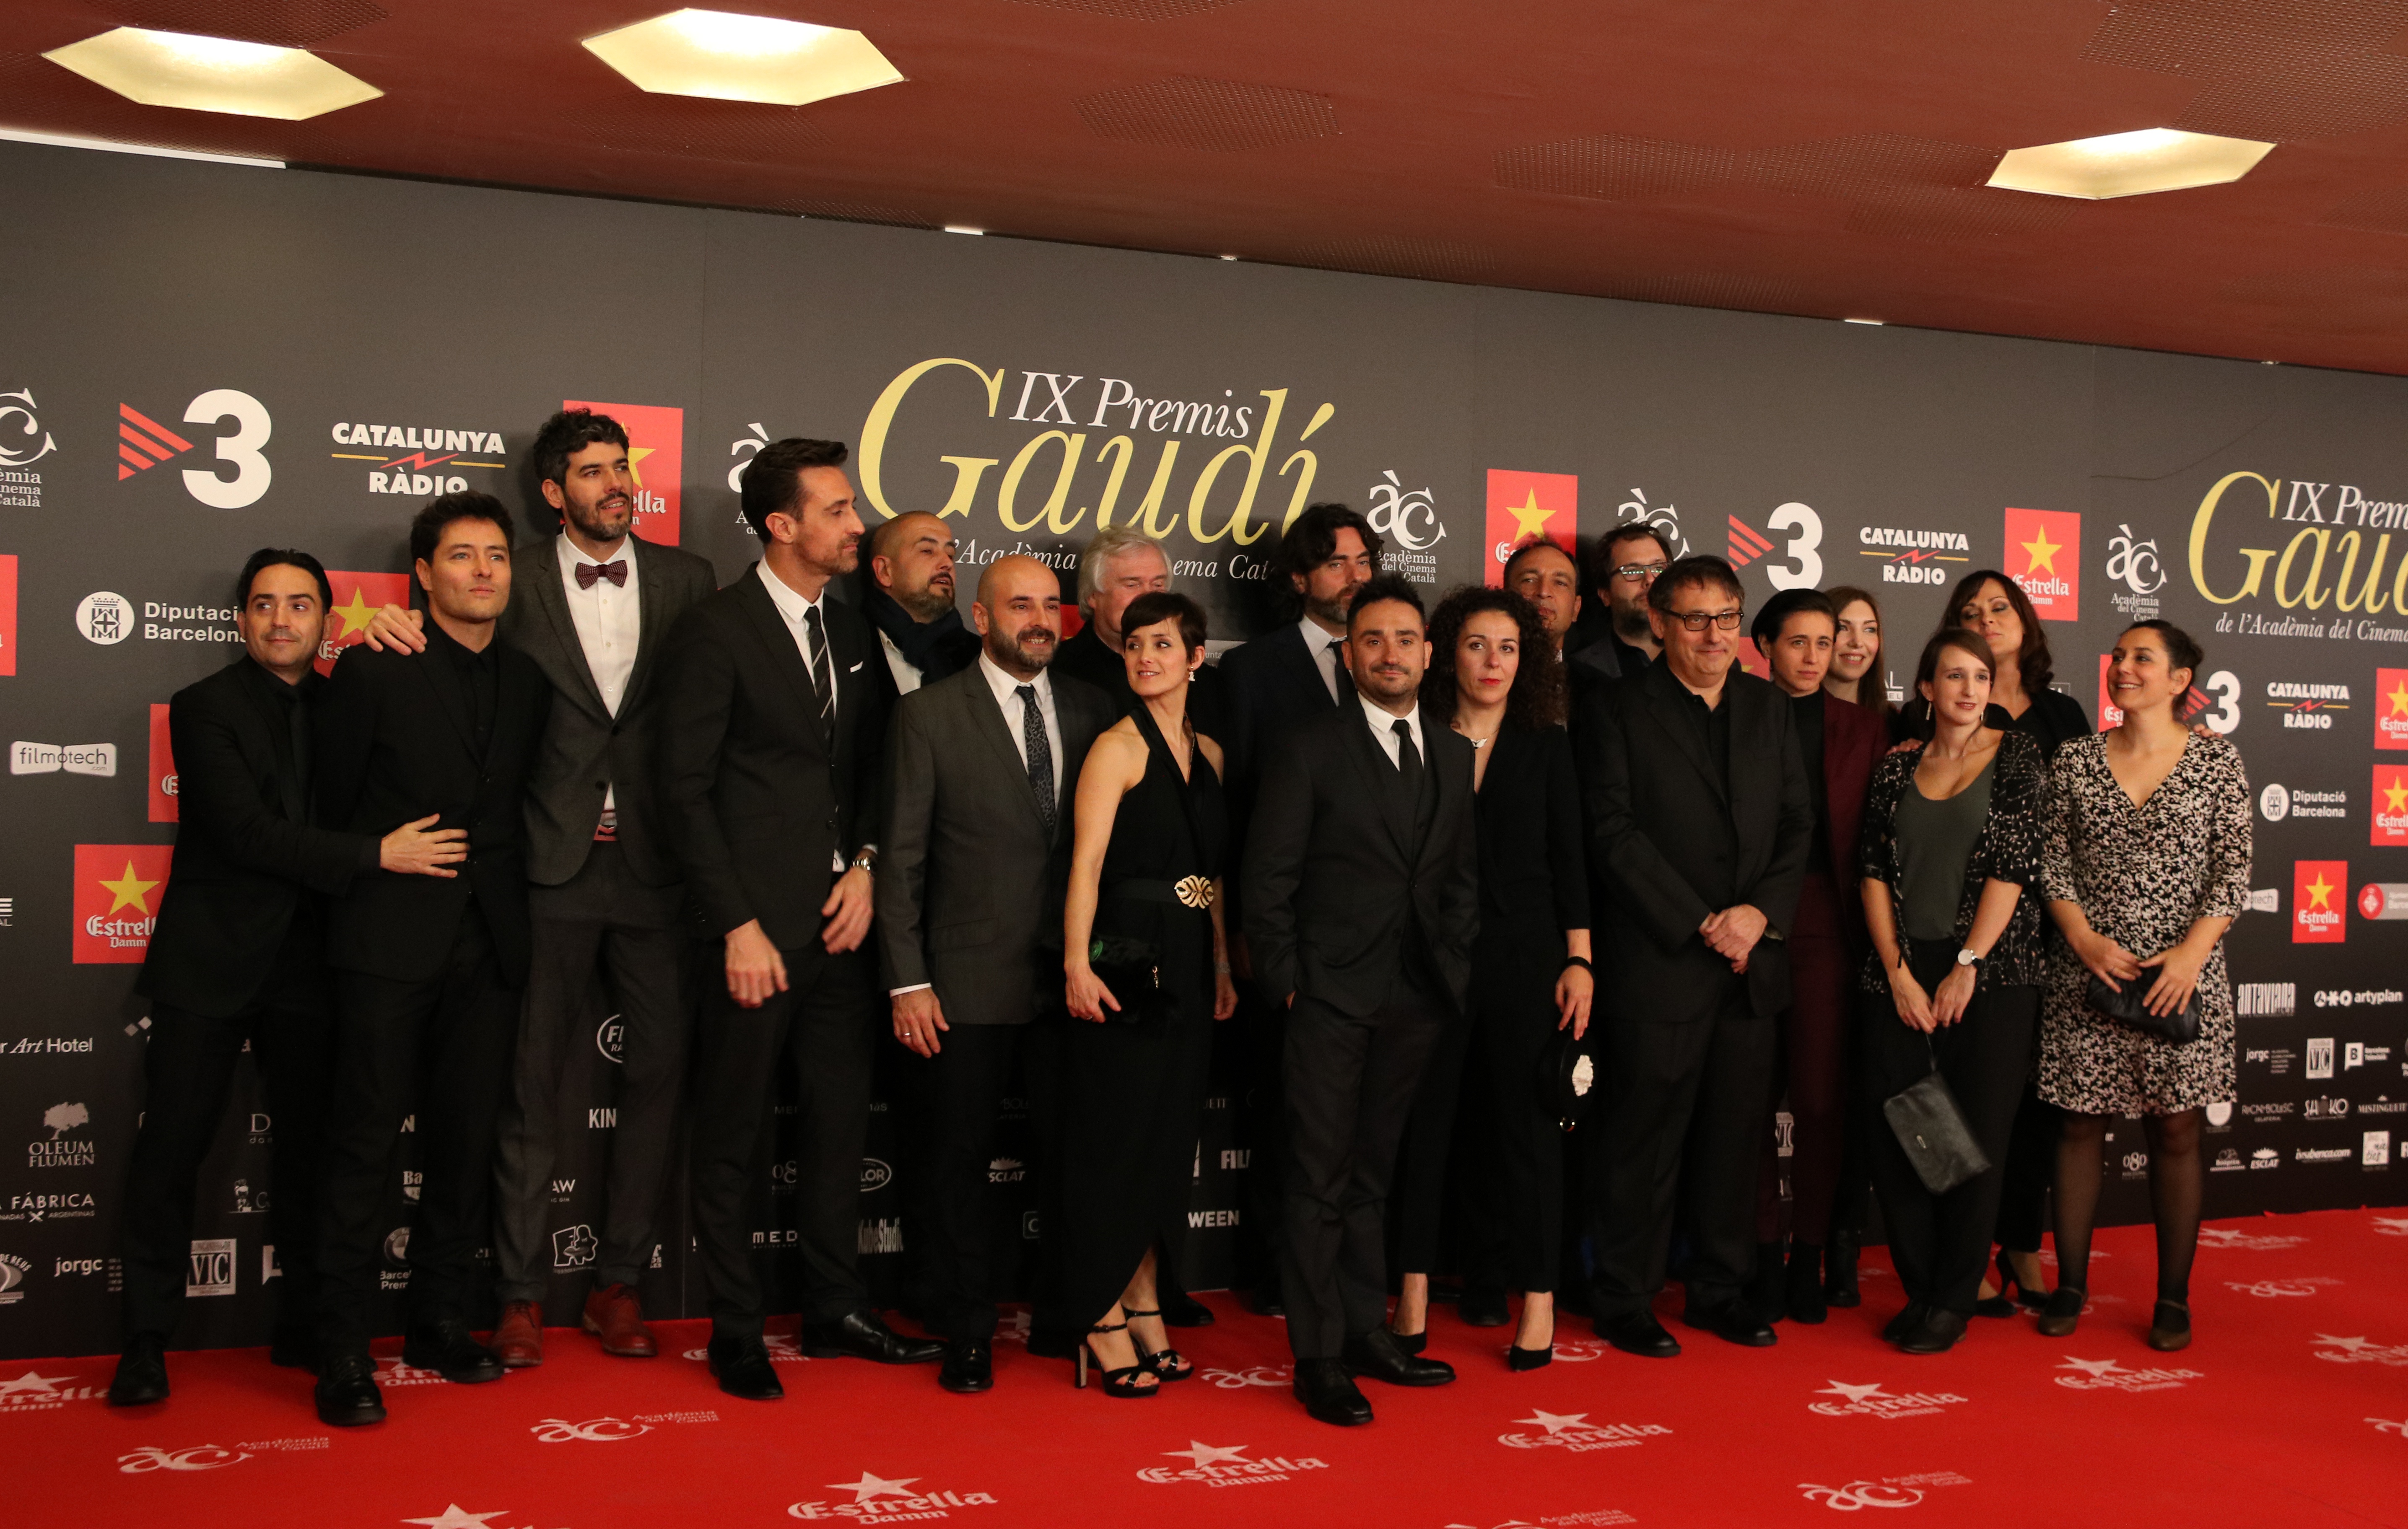 'A Monster Calls' won 8 Gaudí Awards (by ACN)